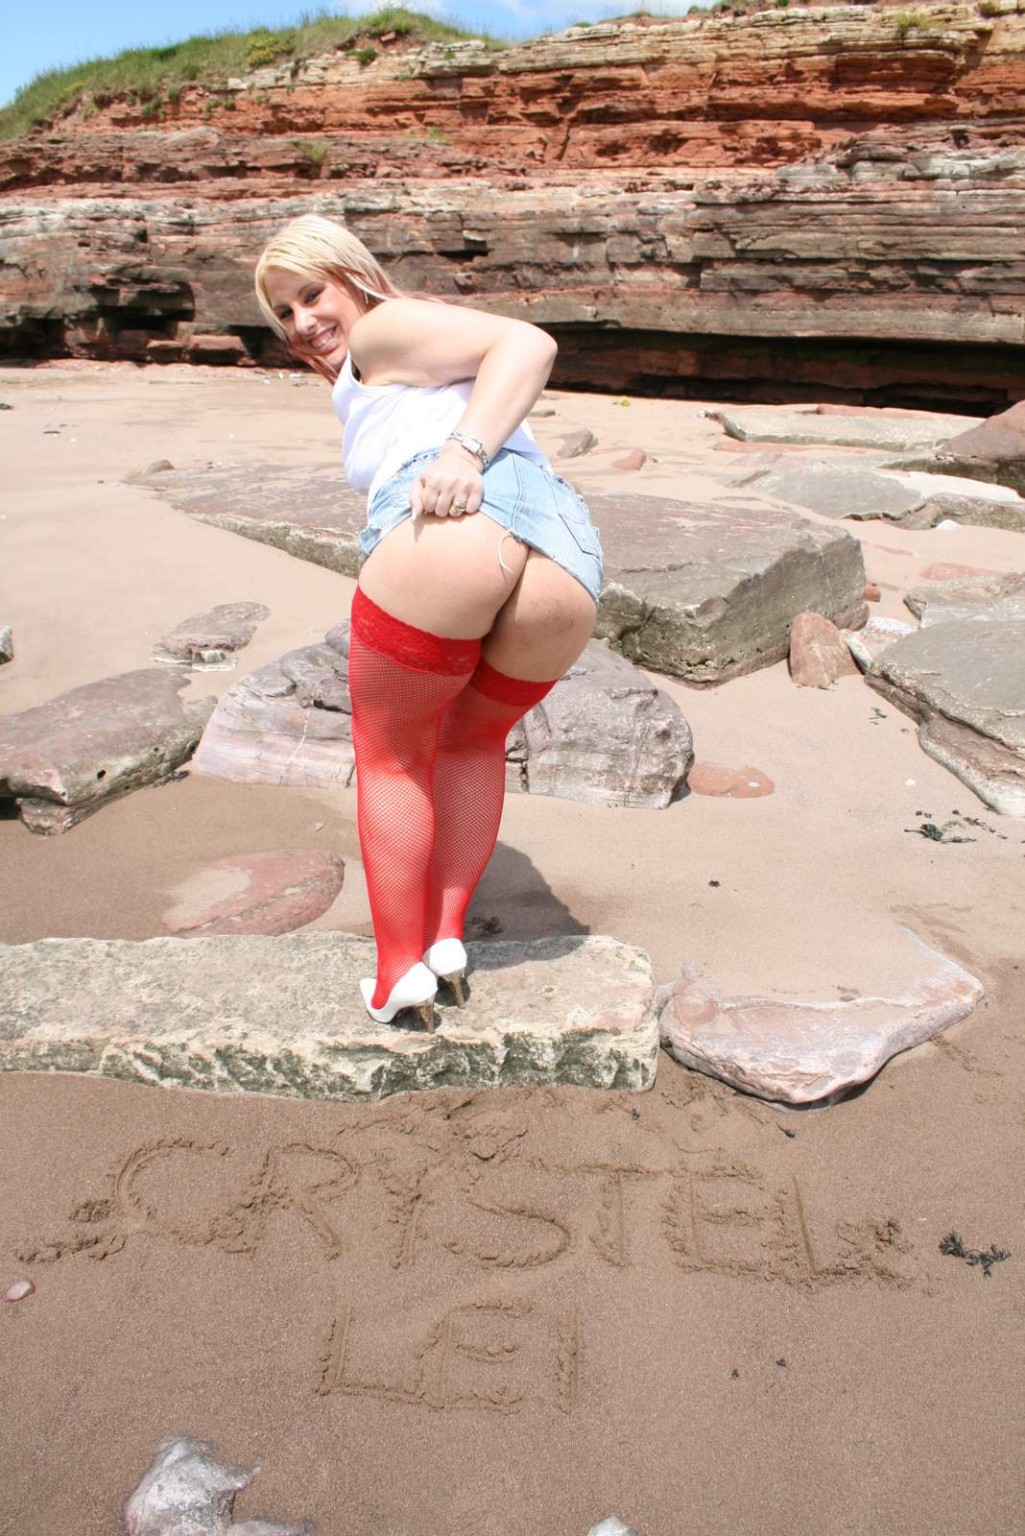 Blonde pornstar public nudity outdoor at the beach #72316375